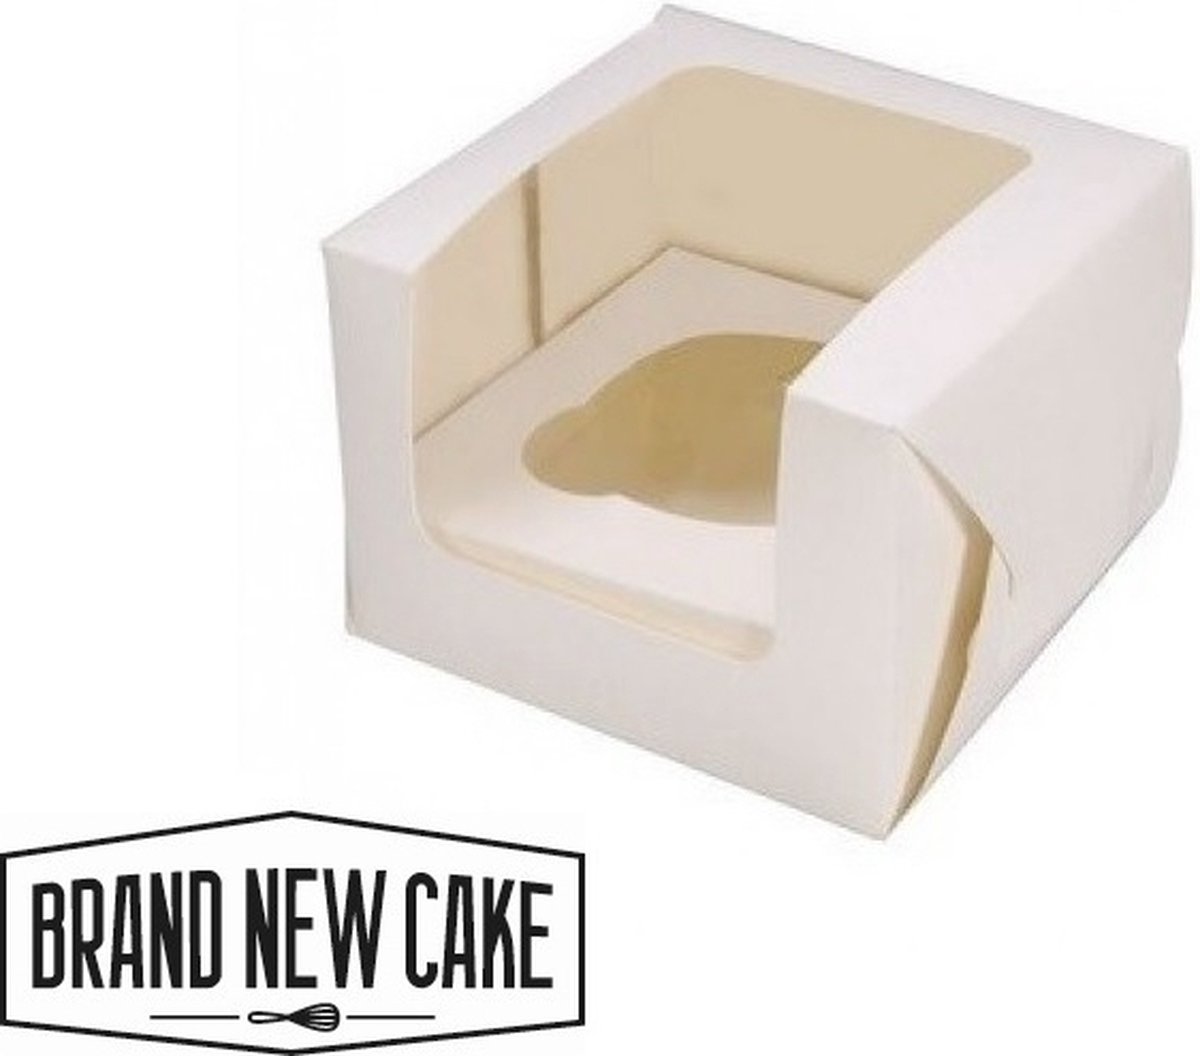 BrandNewCake® Cupcake Doos voor 1 Cupcake - 9x9x9 cm - Wit - Met Tray en Venster - 25 Stuks